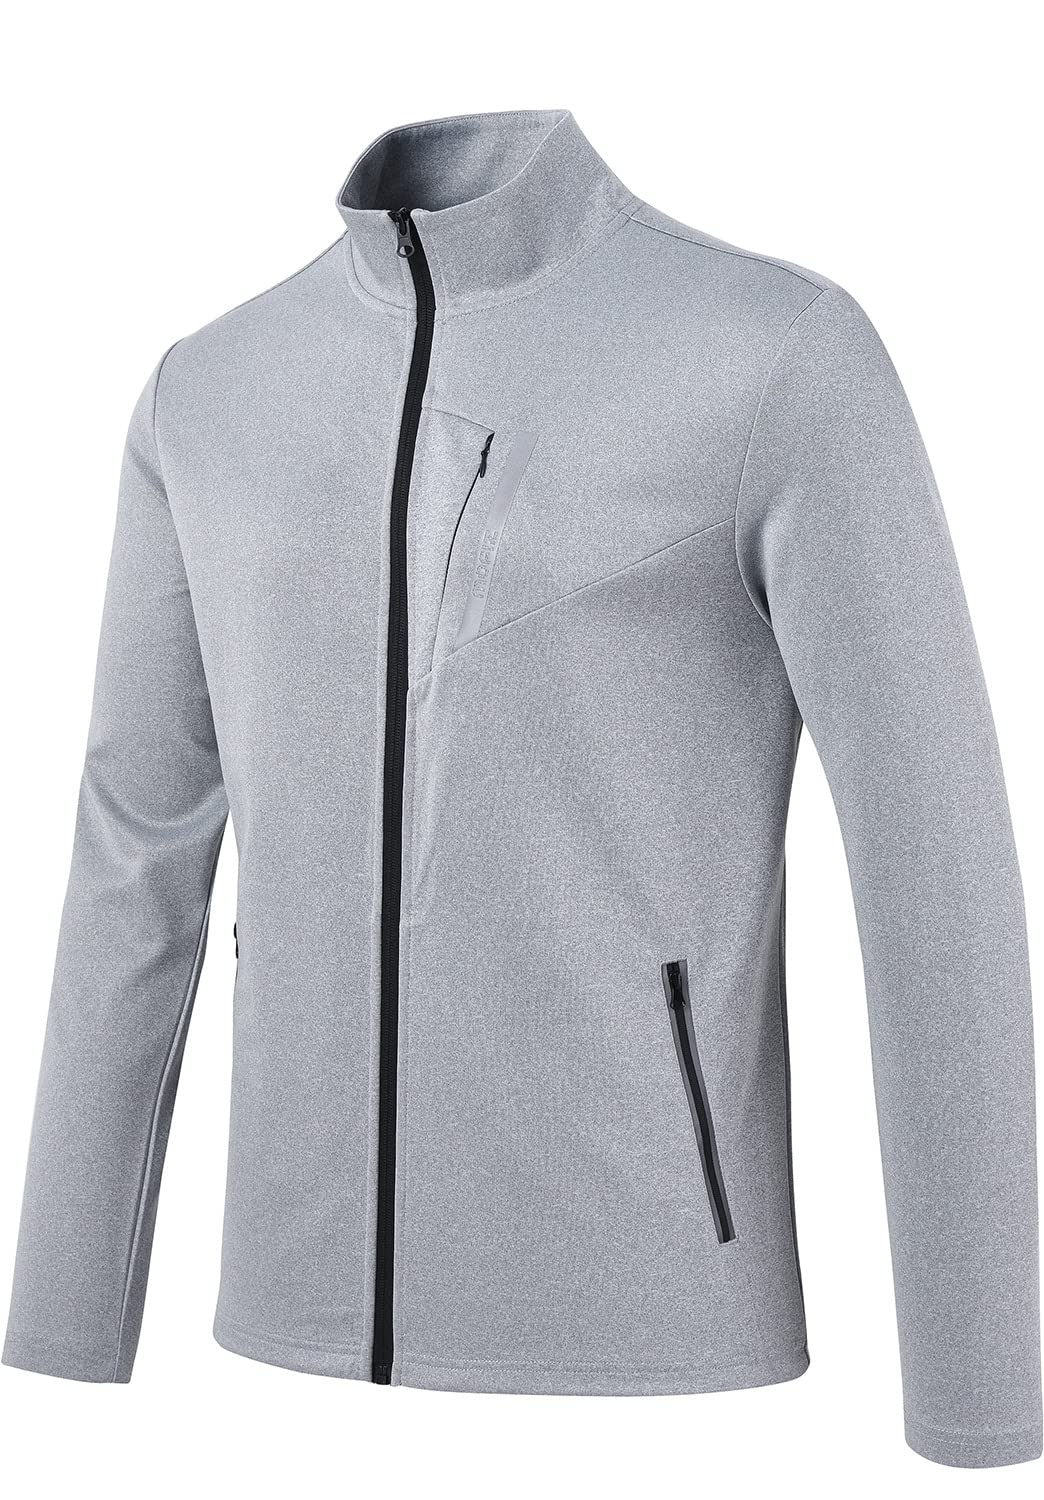 MoFiz Men's Tracksuits,Full Zip Sweat Suits For men,Solid Jogger Sets Active Jackets and Pants 2 Piece Sport Suit For Men's Outfits Light Gray L